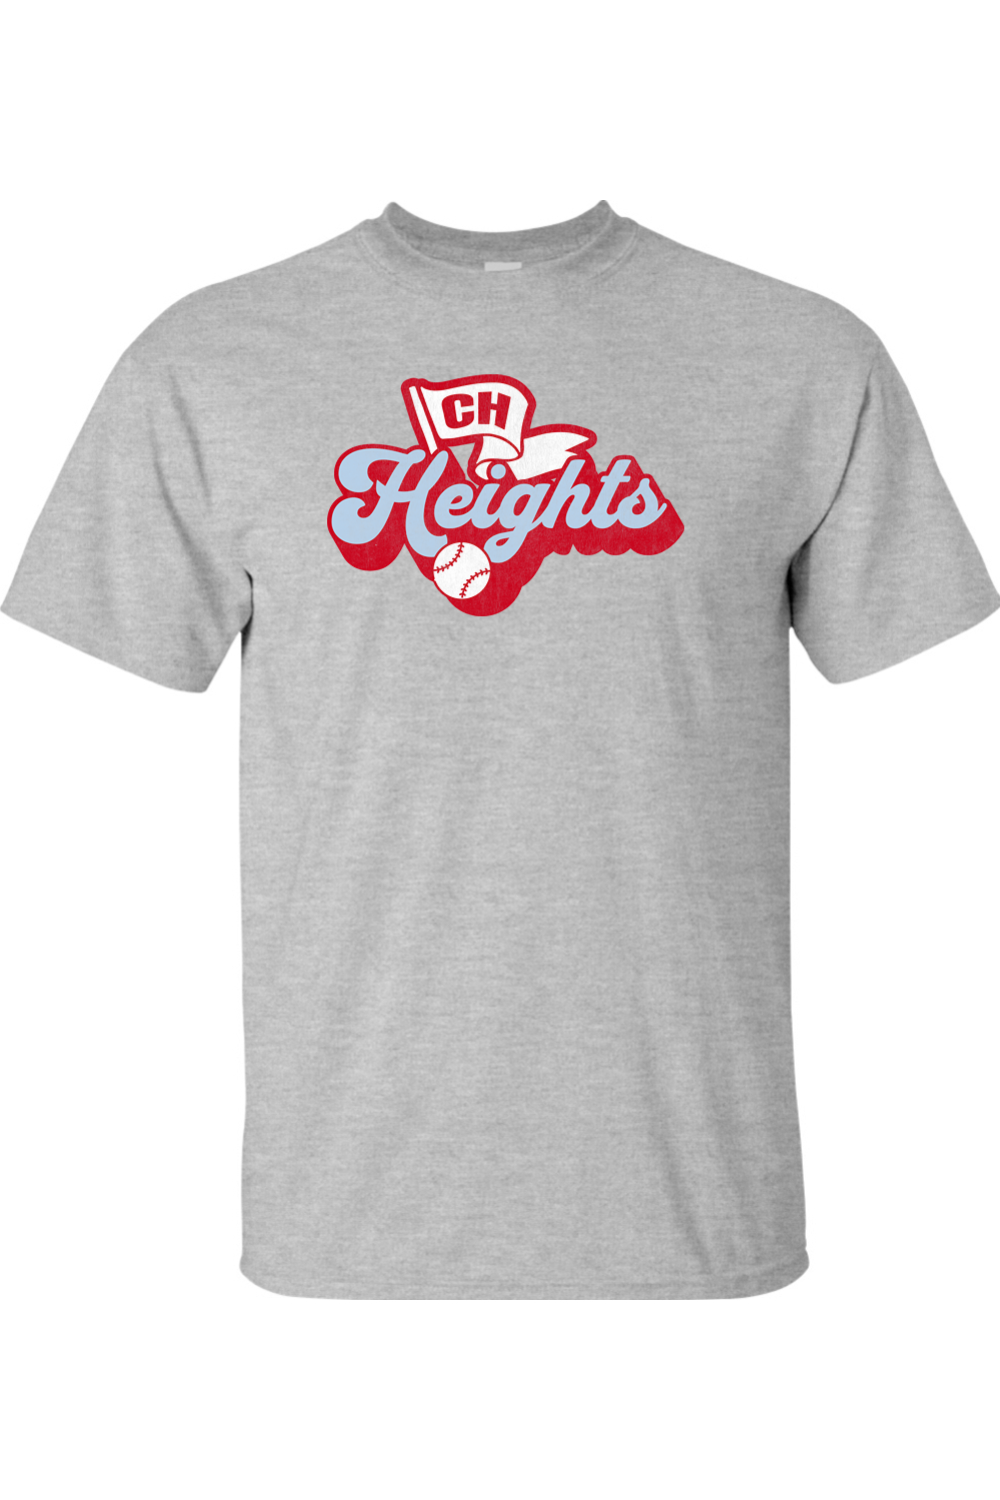 Heights Baseball - Pennant - 4XL & 5XL T-Shirt - Yinzylvania